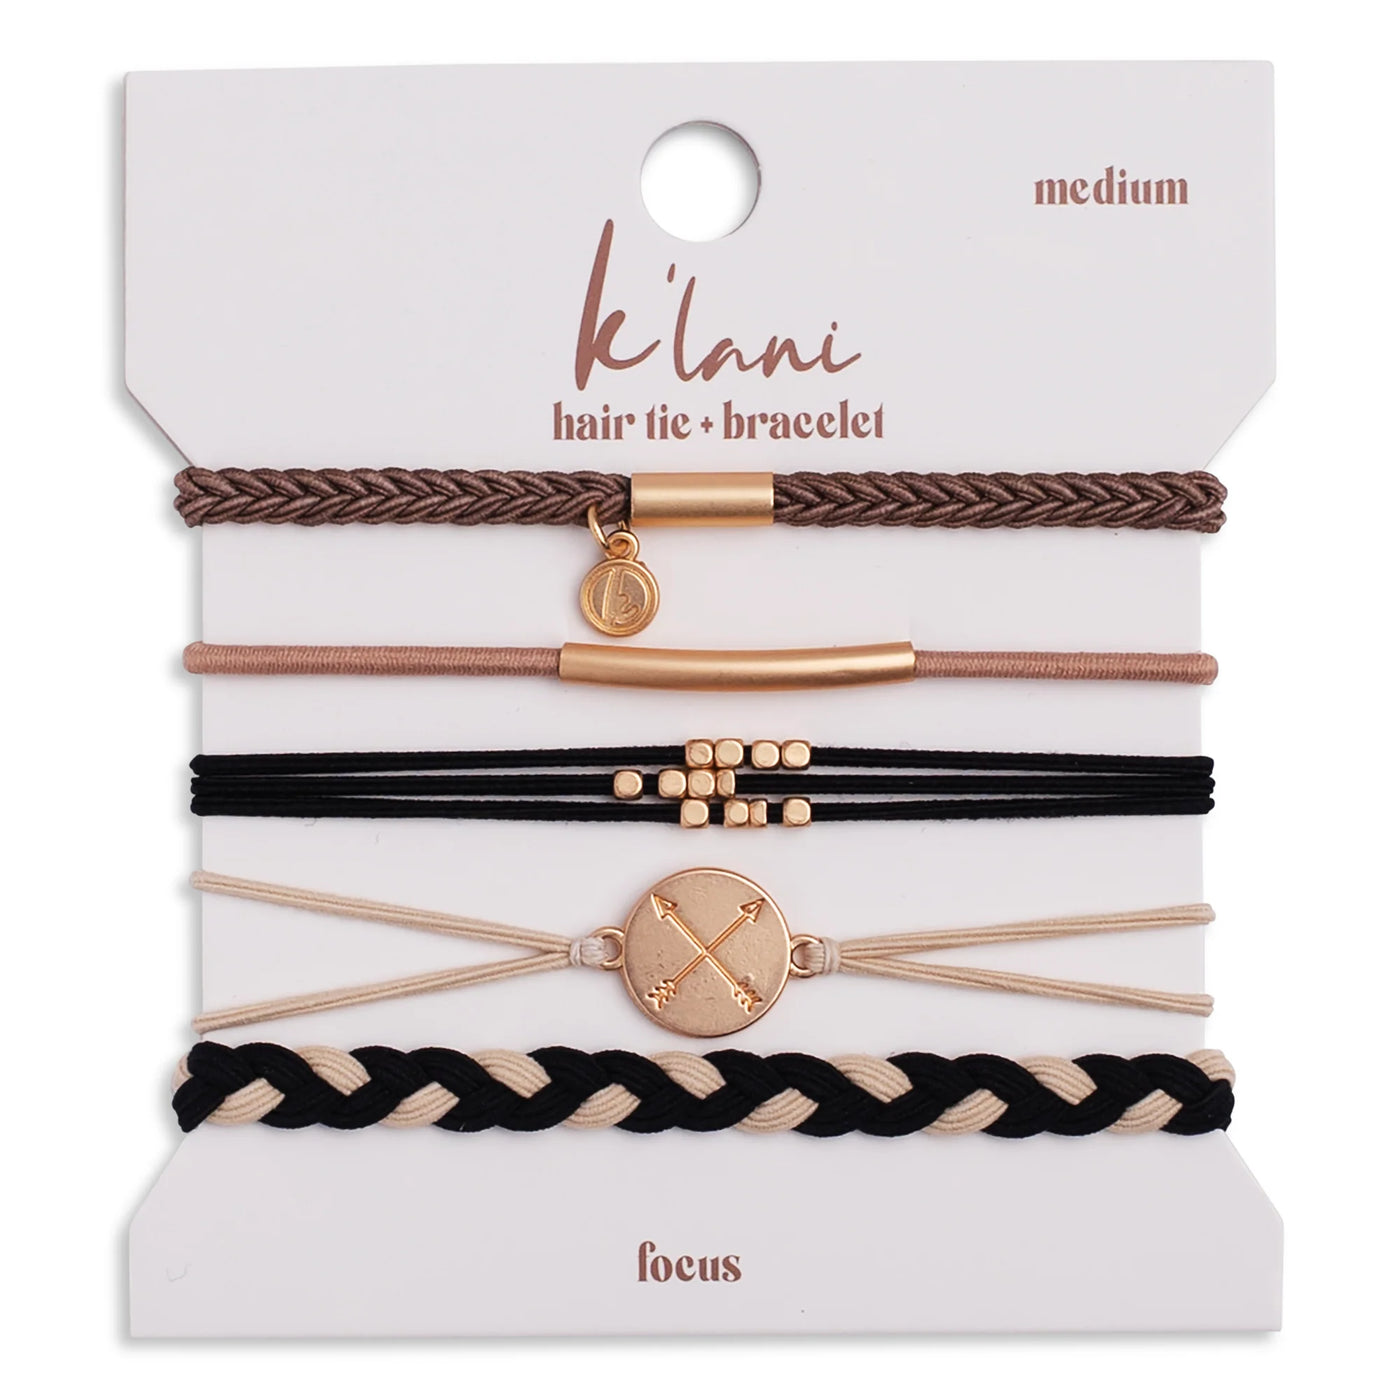 K'lani Hair Tie Bracelet - Focus